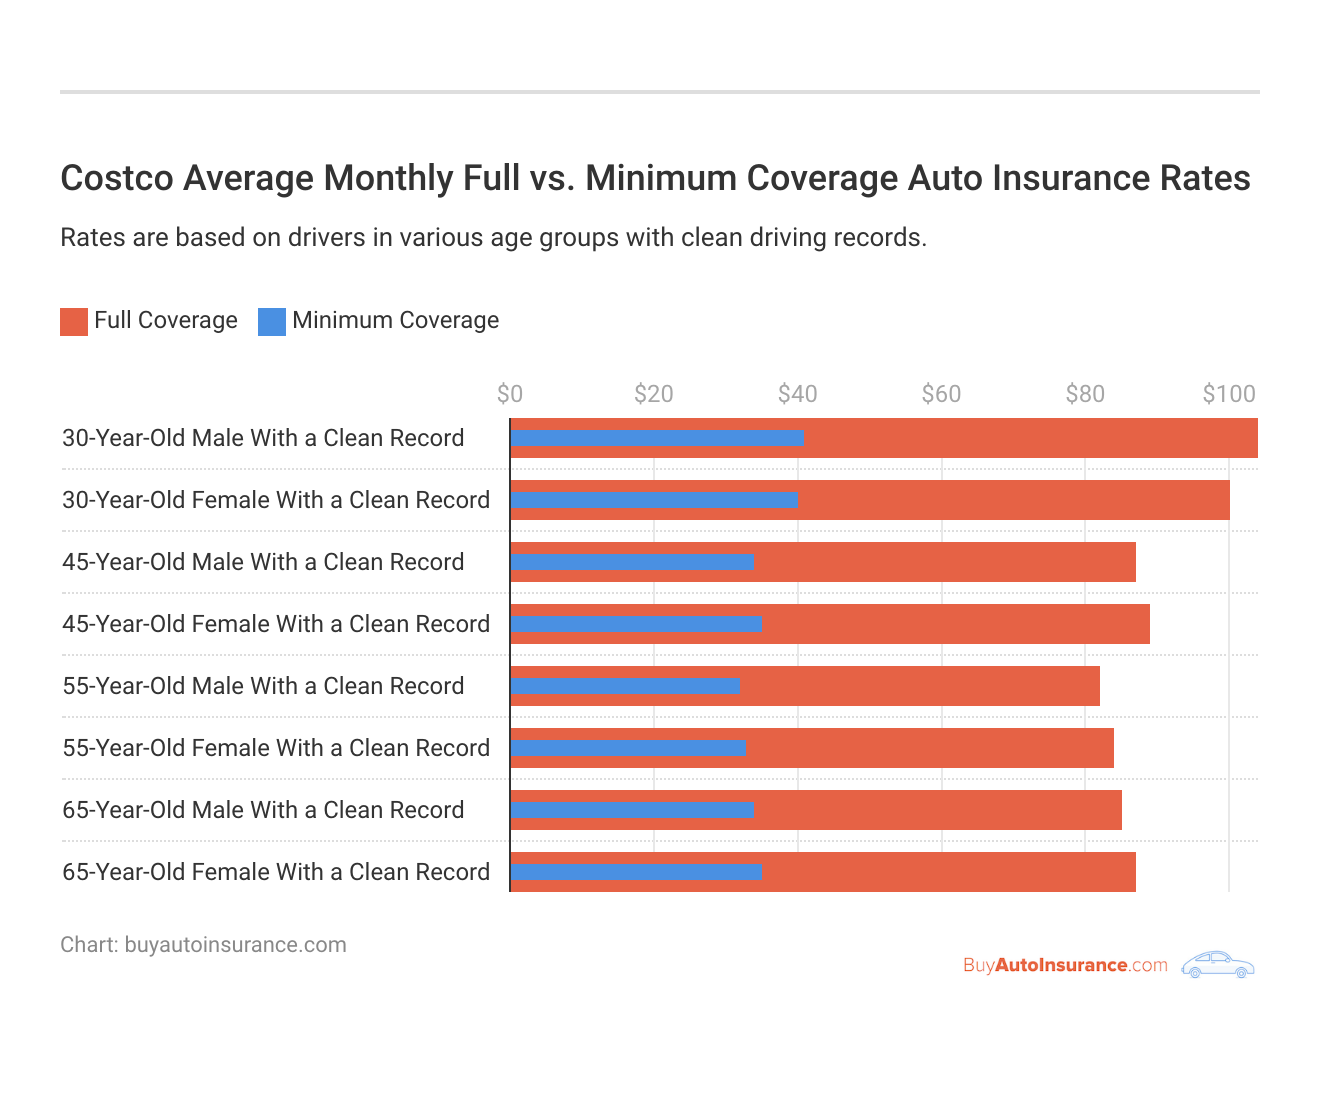 <h3>Costco Average Monthly Full vs. Minimum Coverage Auto Insurance Rates</h3>